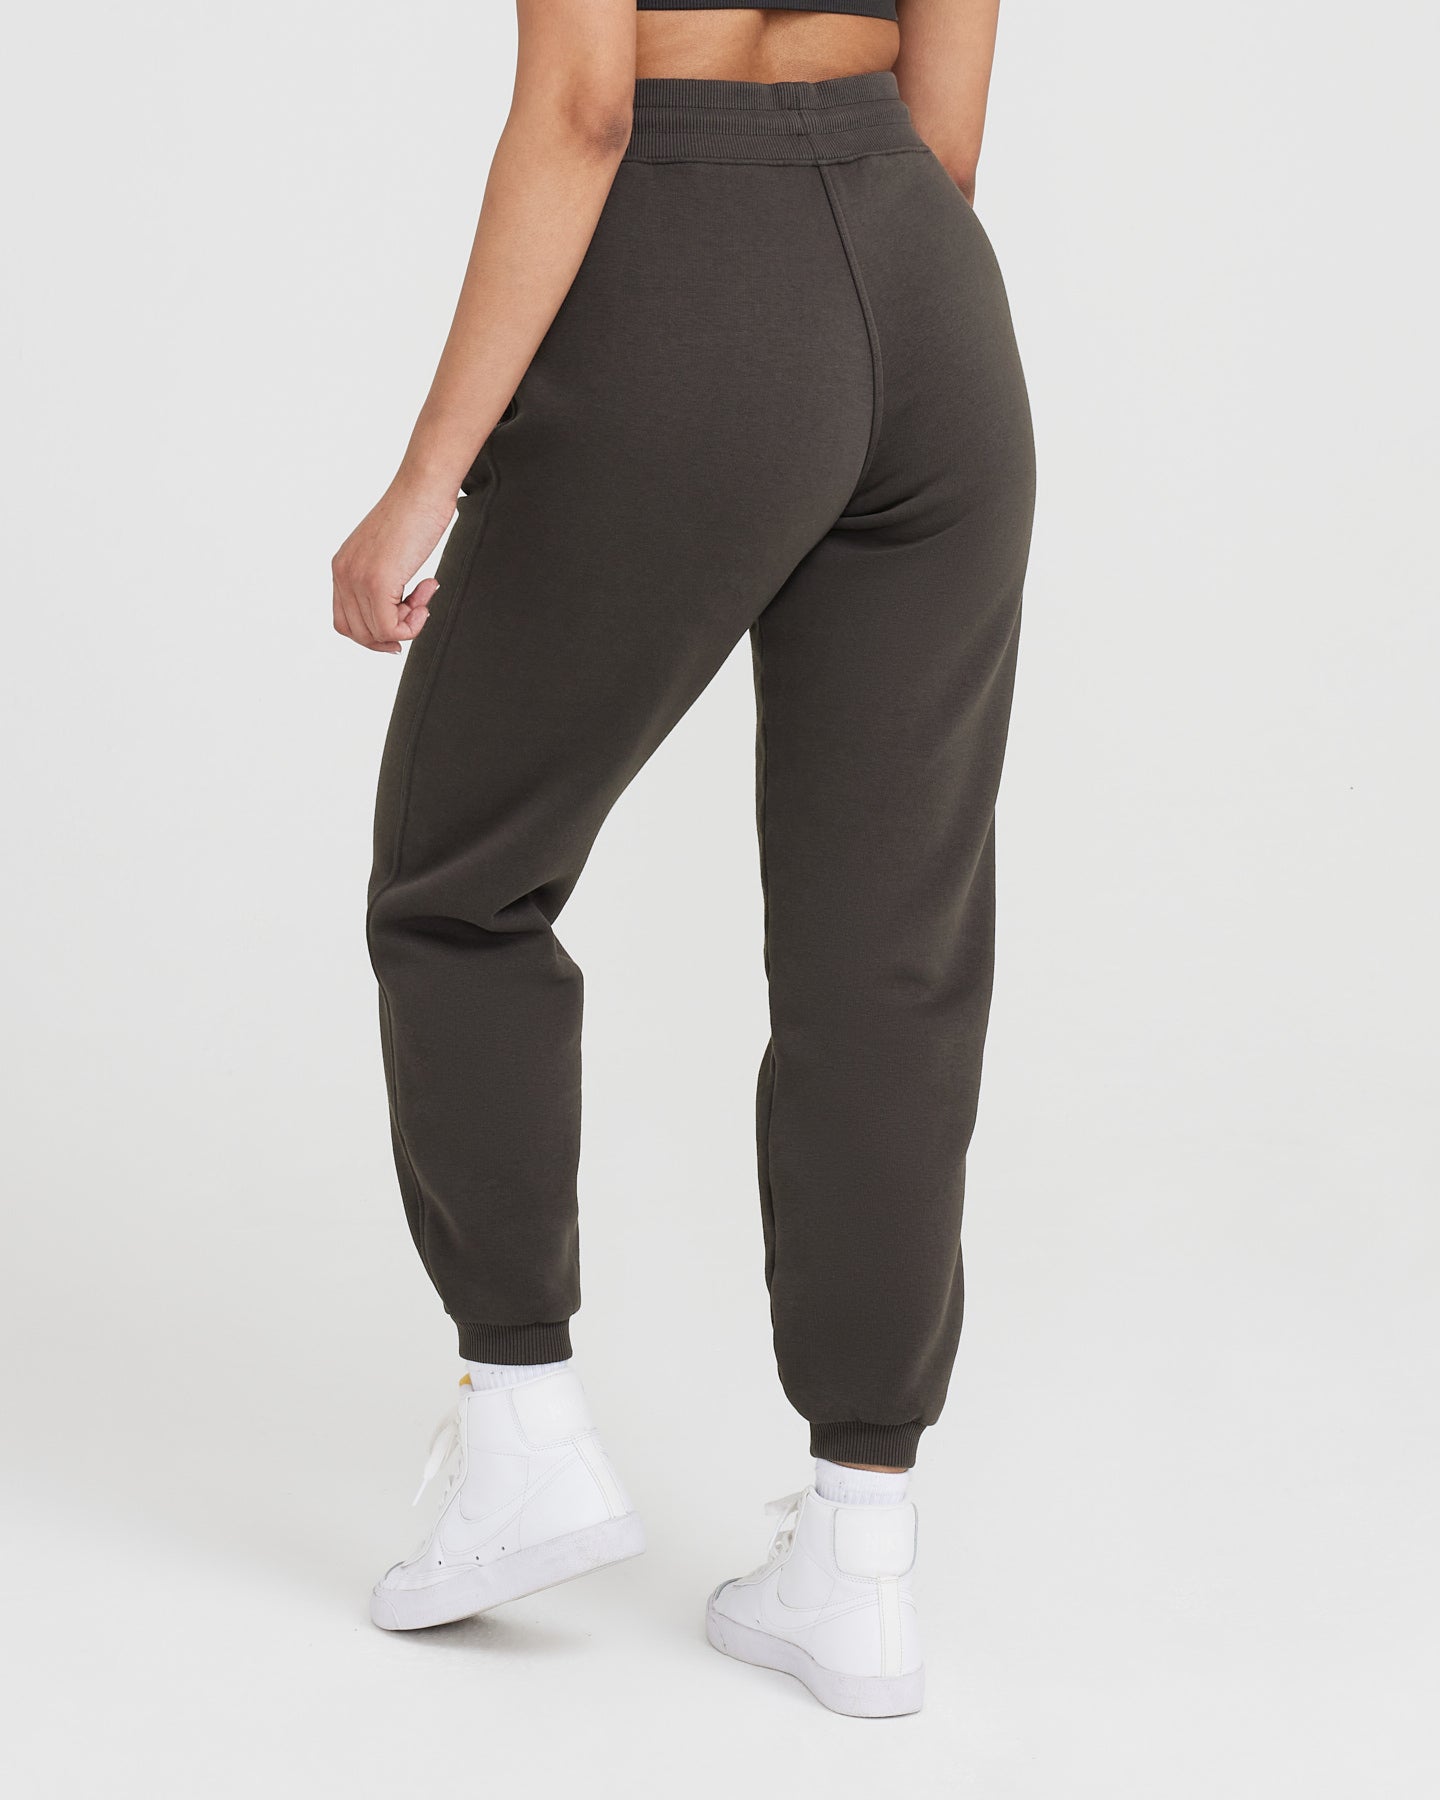  HeSaYep High Waisted Sweatpants for Women Workout